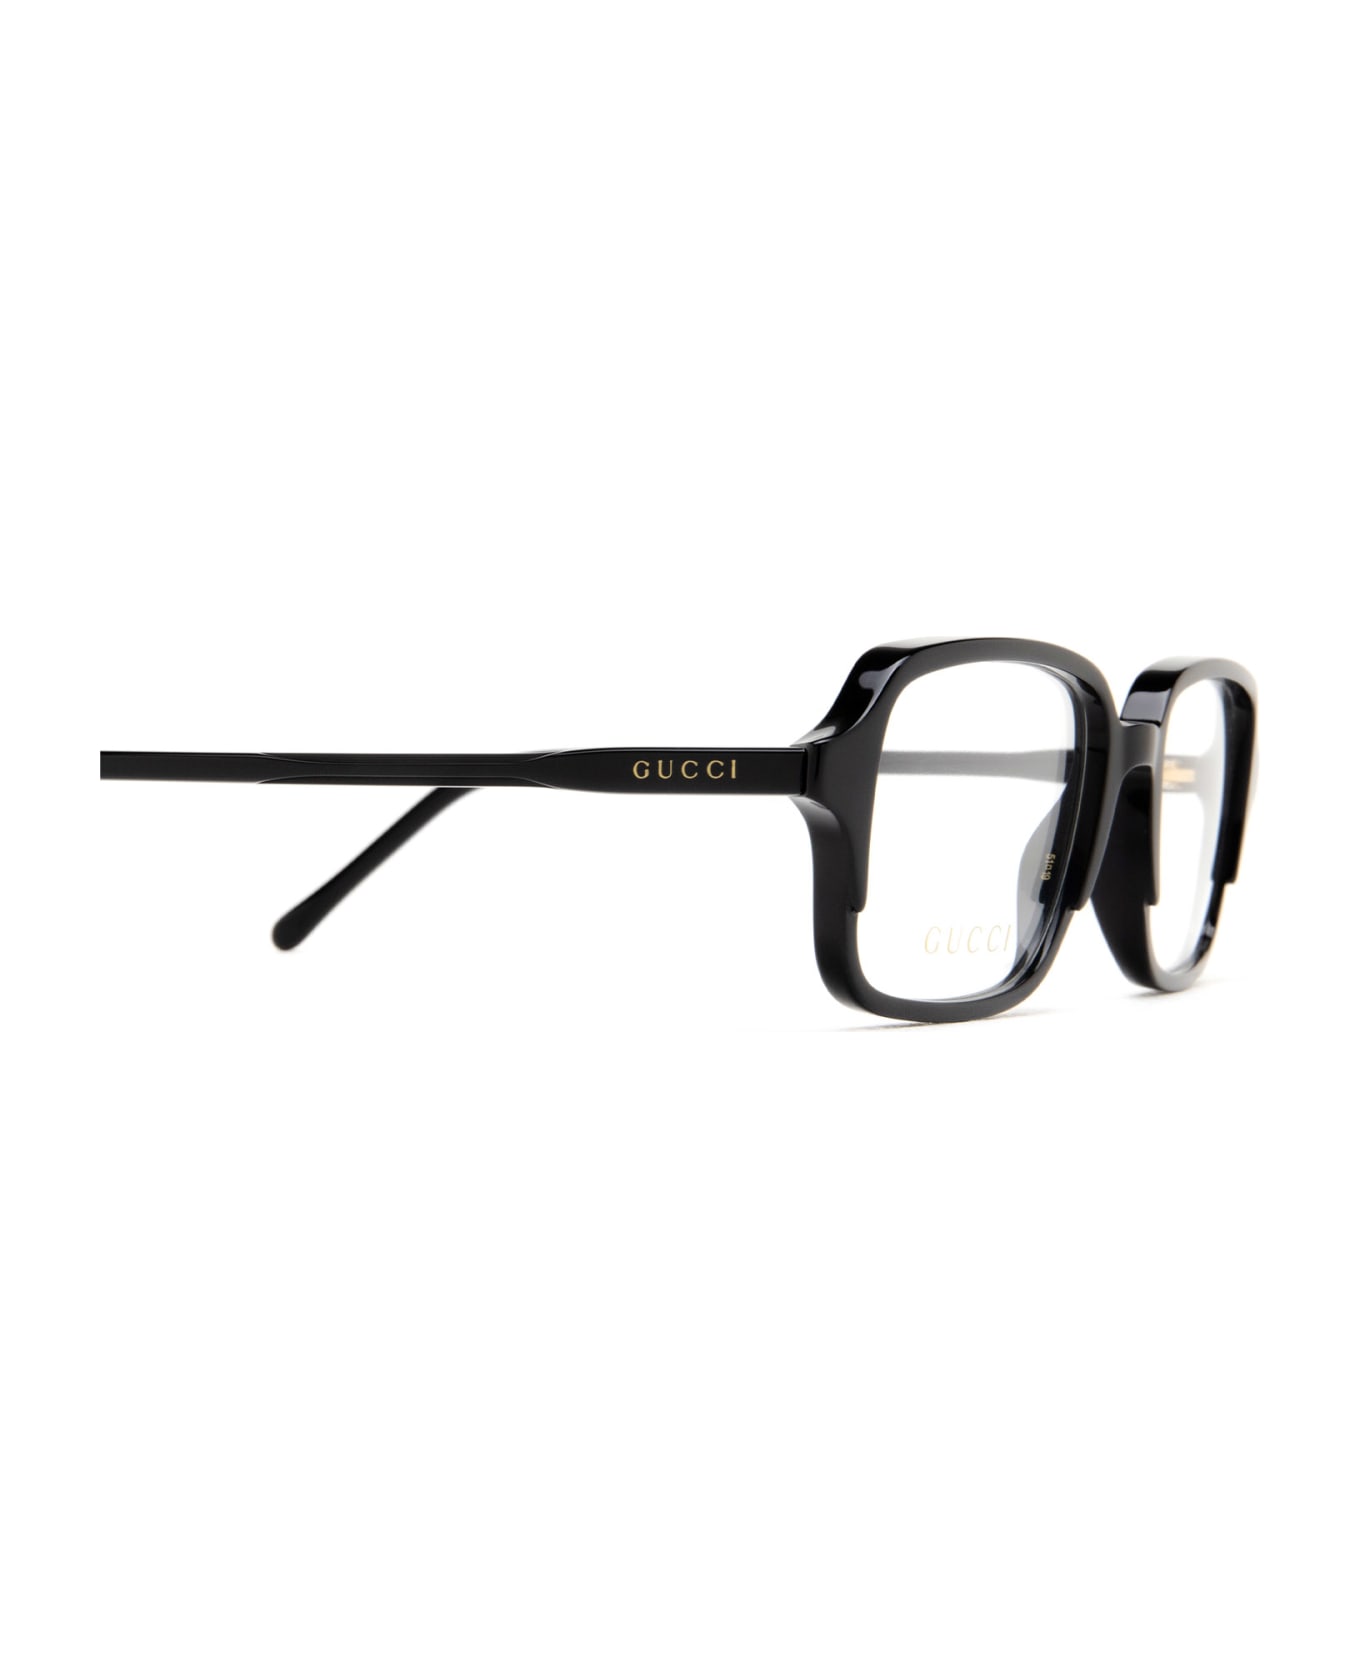 Gucci Eyewear Gg1211o Black Glasses - Black アイウェア